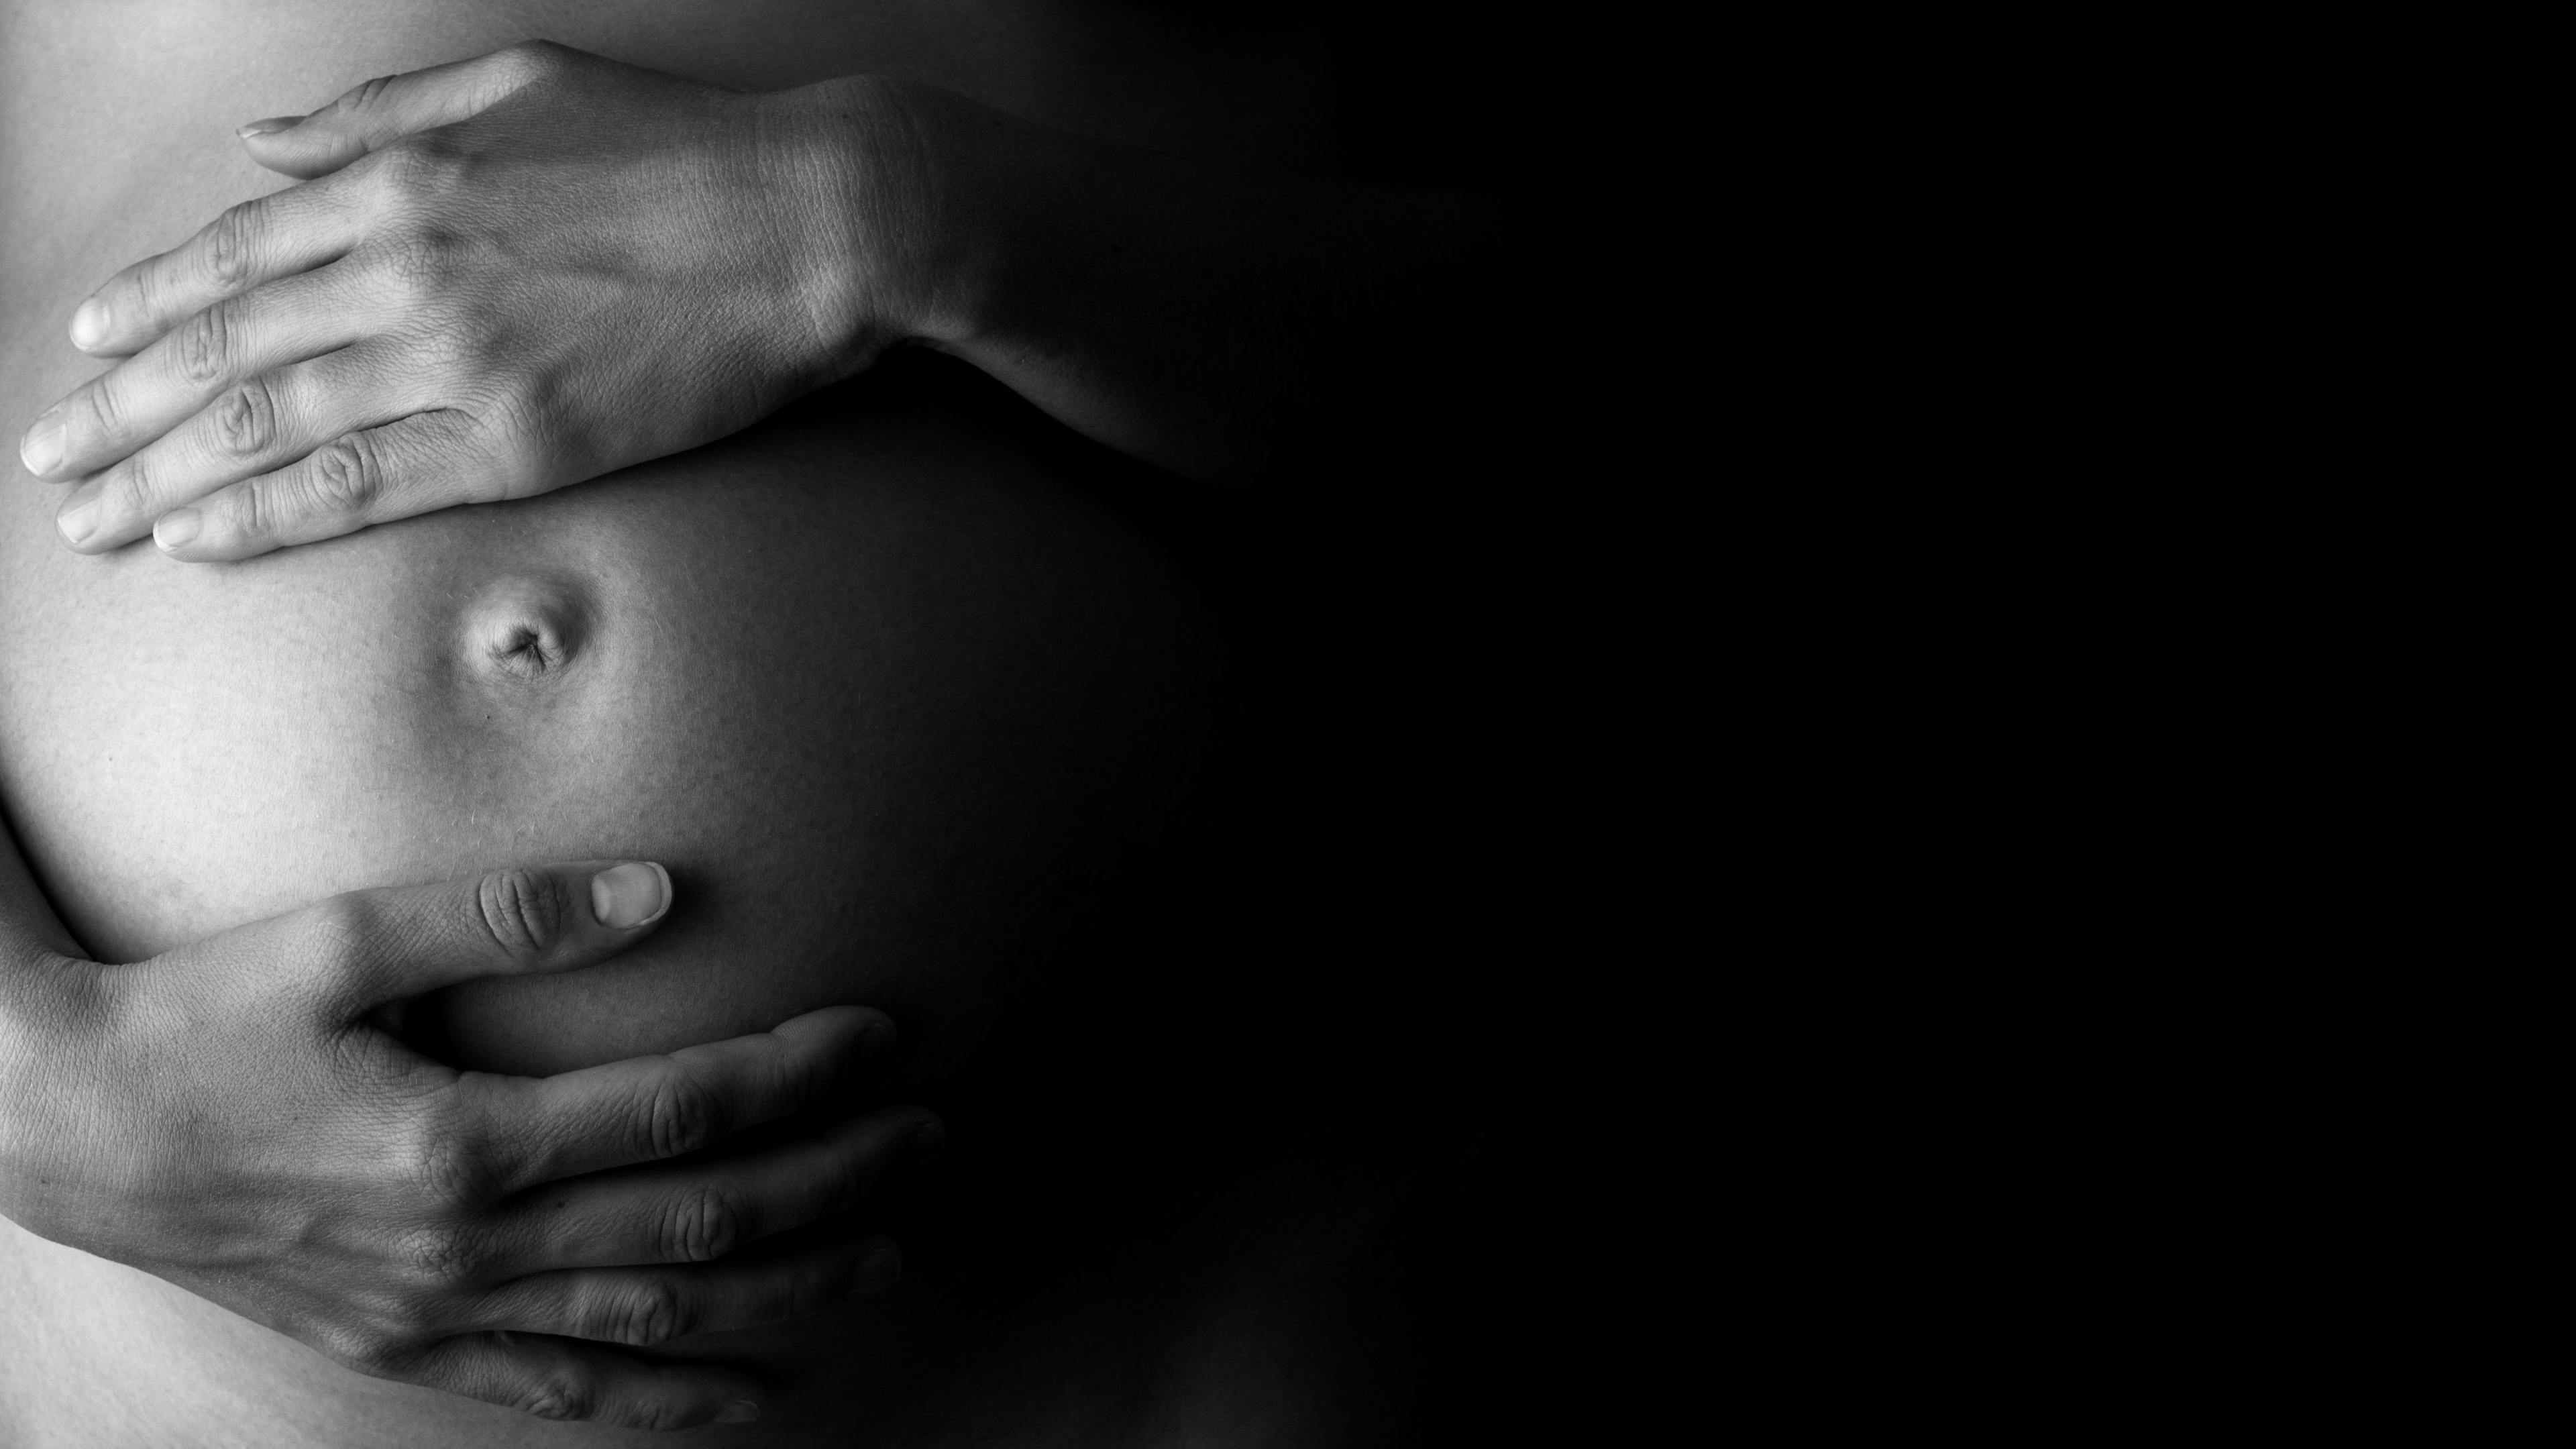 Black and White Pregnancy Portrait | image credit: Gajus - stock.adobe.com